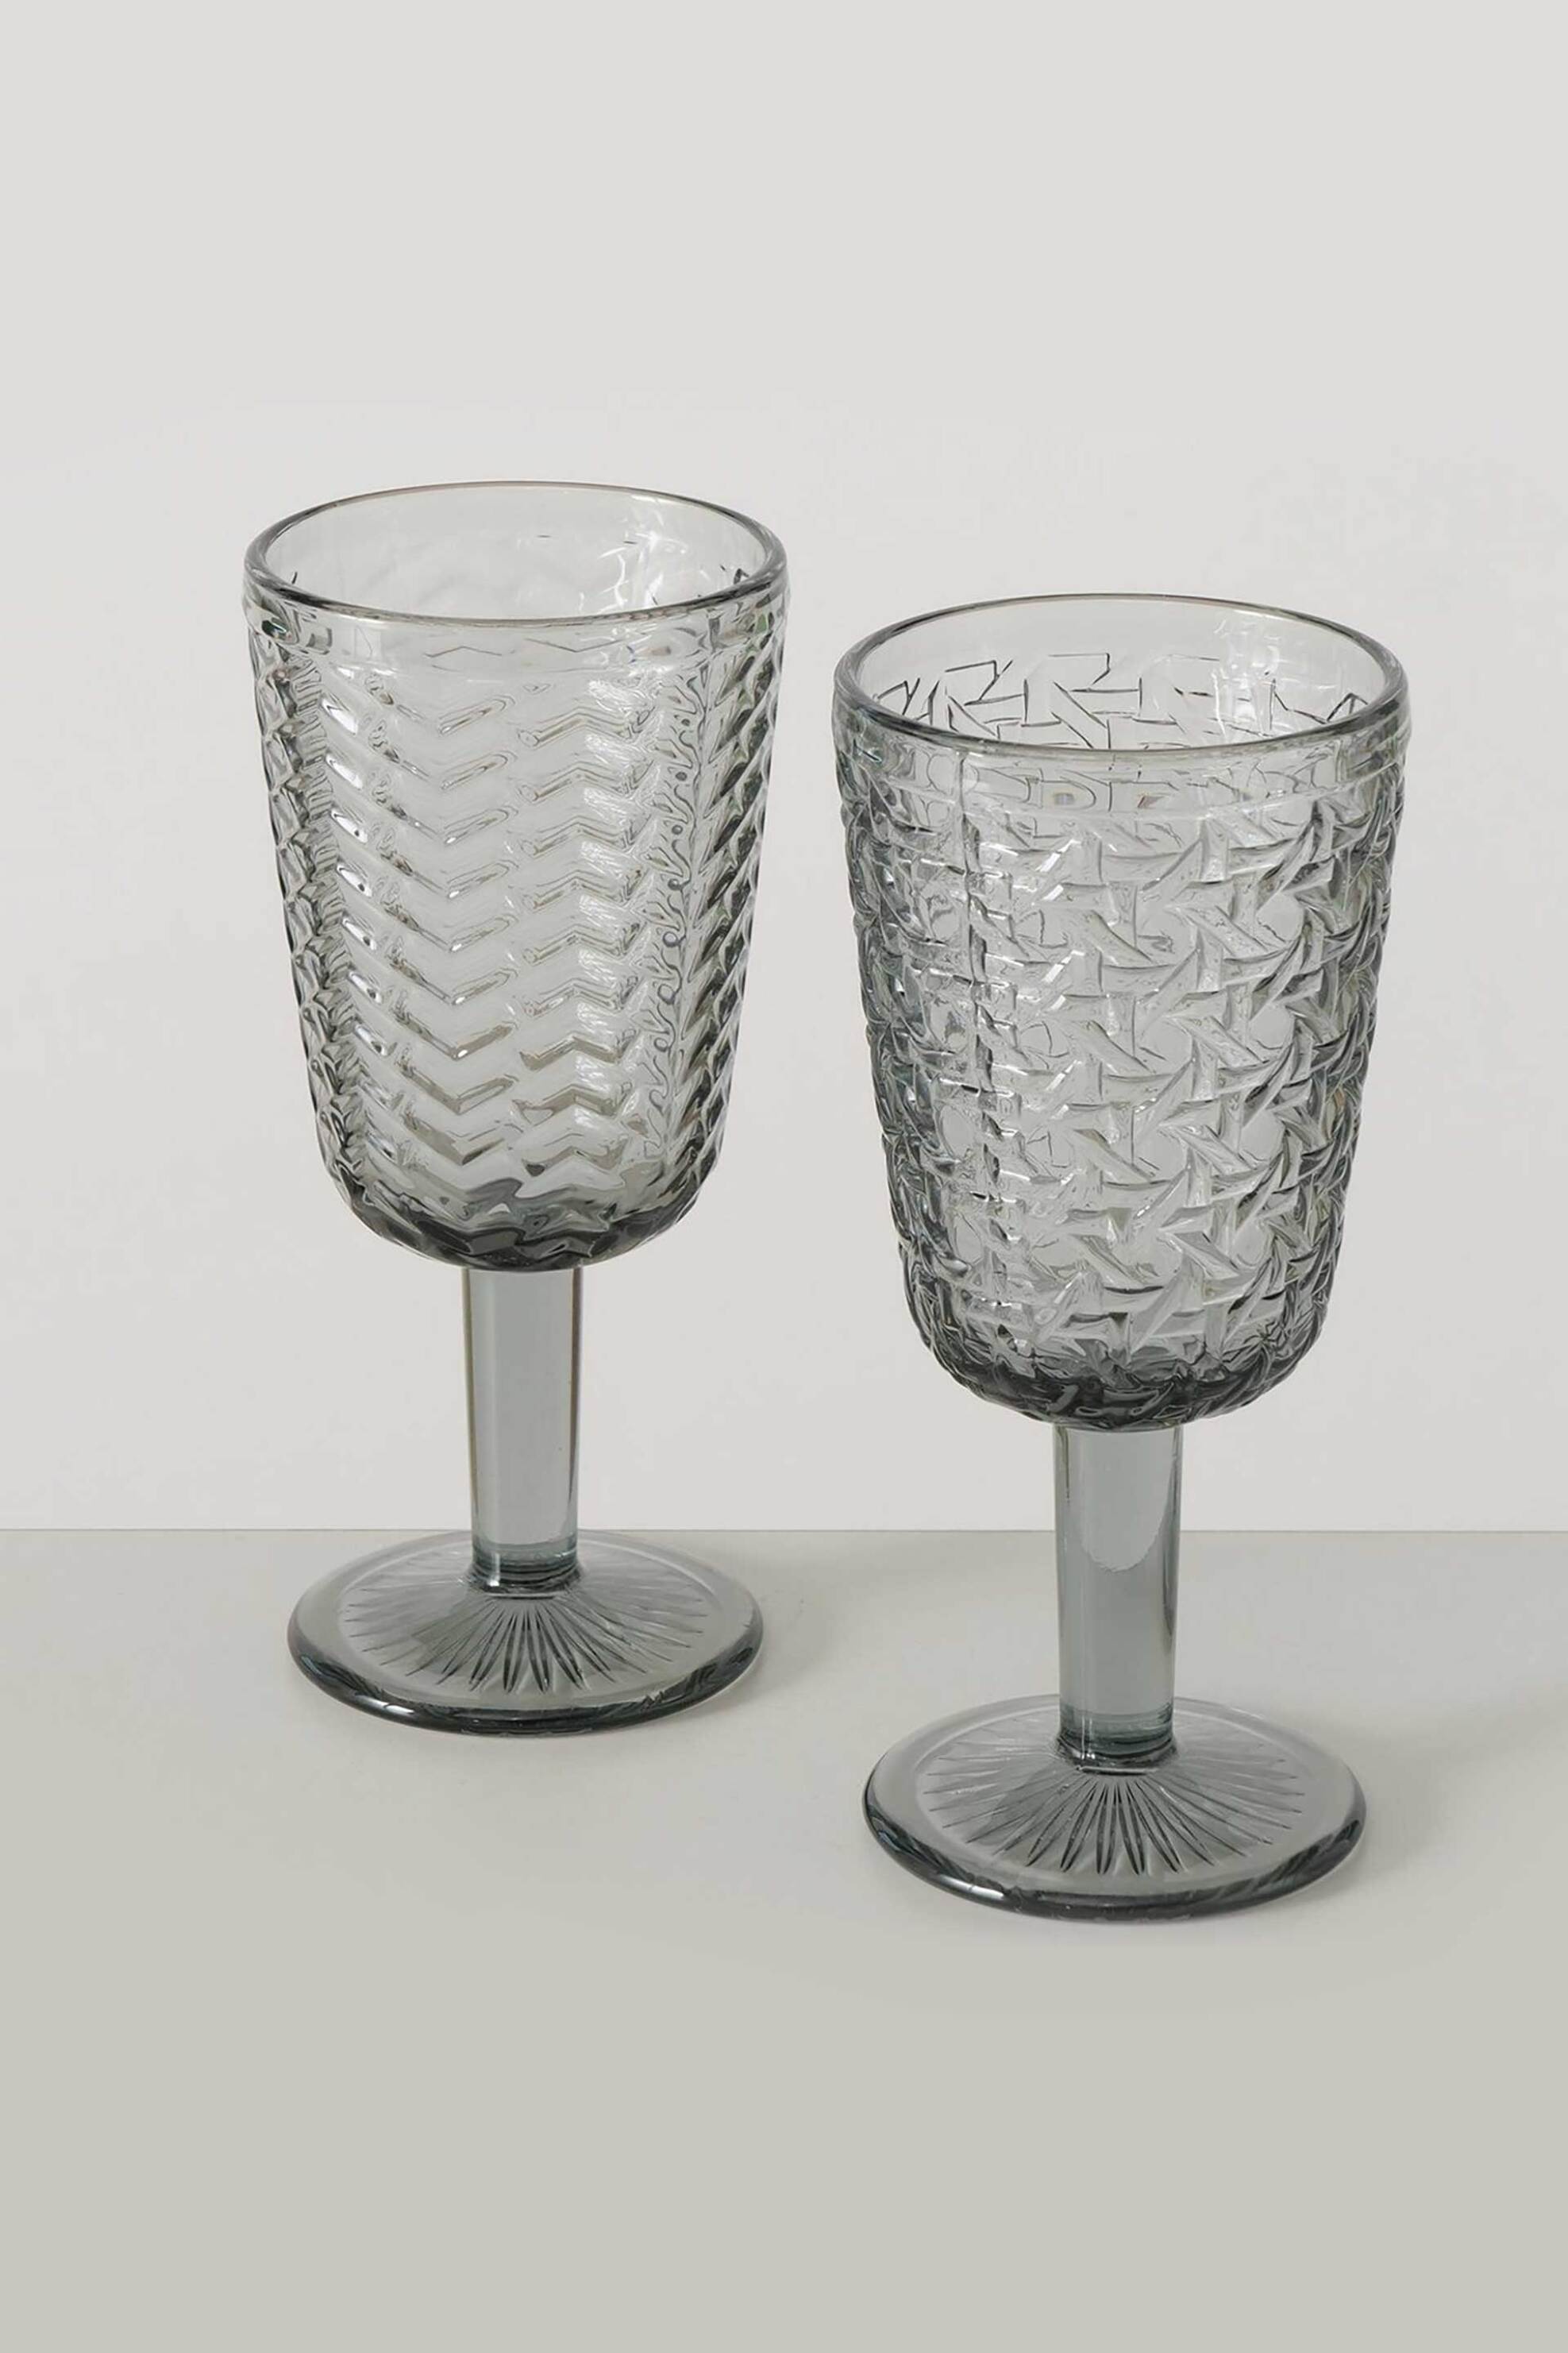 Home > ΚΟΥΖΙΝΑ > Υαλικά > Ποτήρια DOMUS HOMUS γυάλινο ποτήρι με πόδι "Keano" 17 cm - 20-25-466